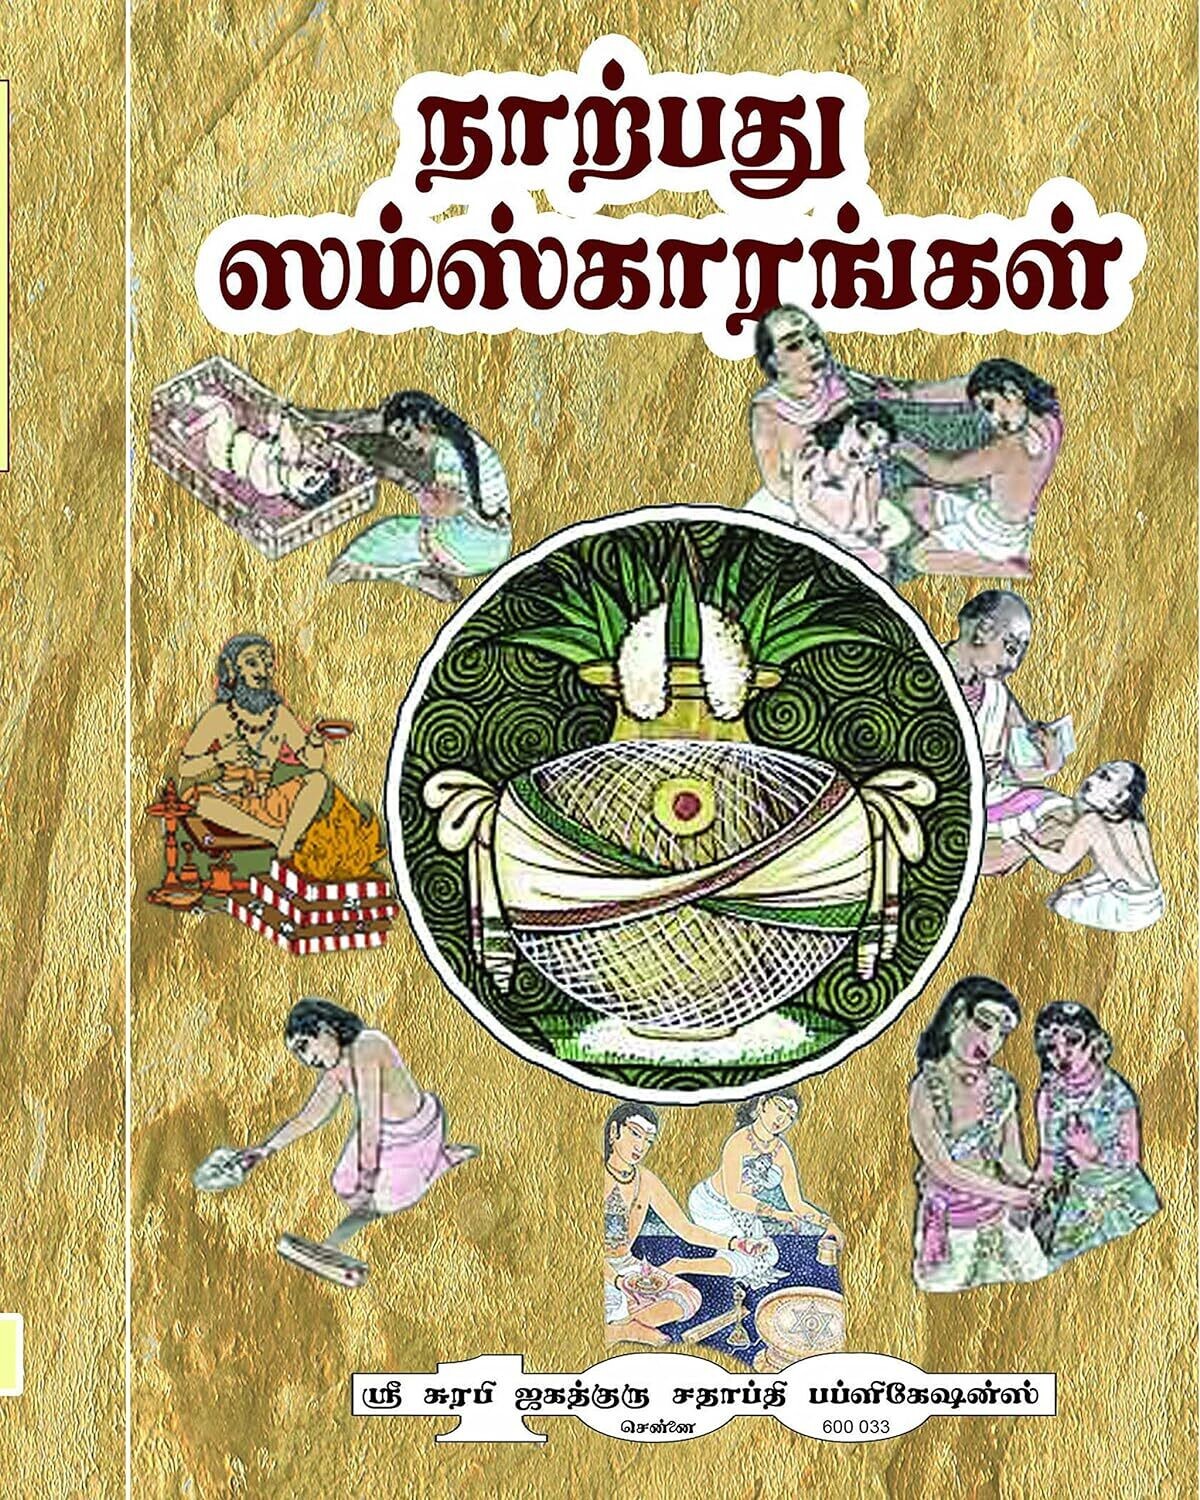 40 Samskaras - 
 Jathakarma Choula Upanayana Vivaha samskara meanings, 40 ஸம்ஸ்காரங்கள், ஜாதகர்ம சௌள உபநயன விவாஹ ஸம்ஸ்காரங்களின் விளக்கம்